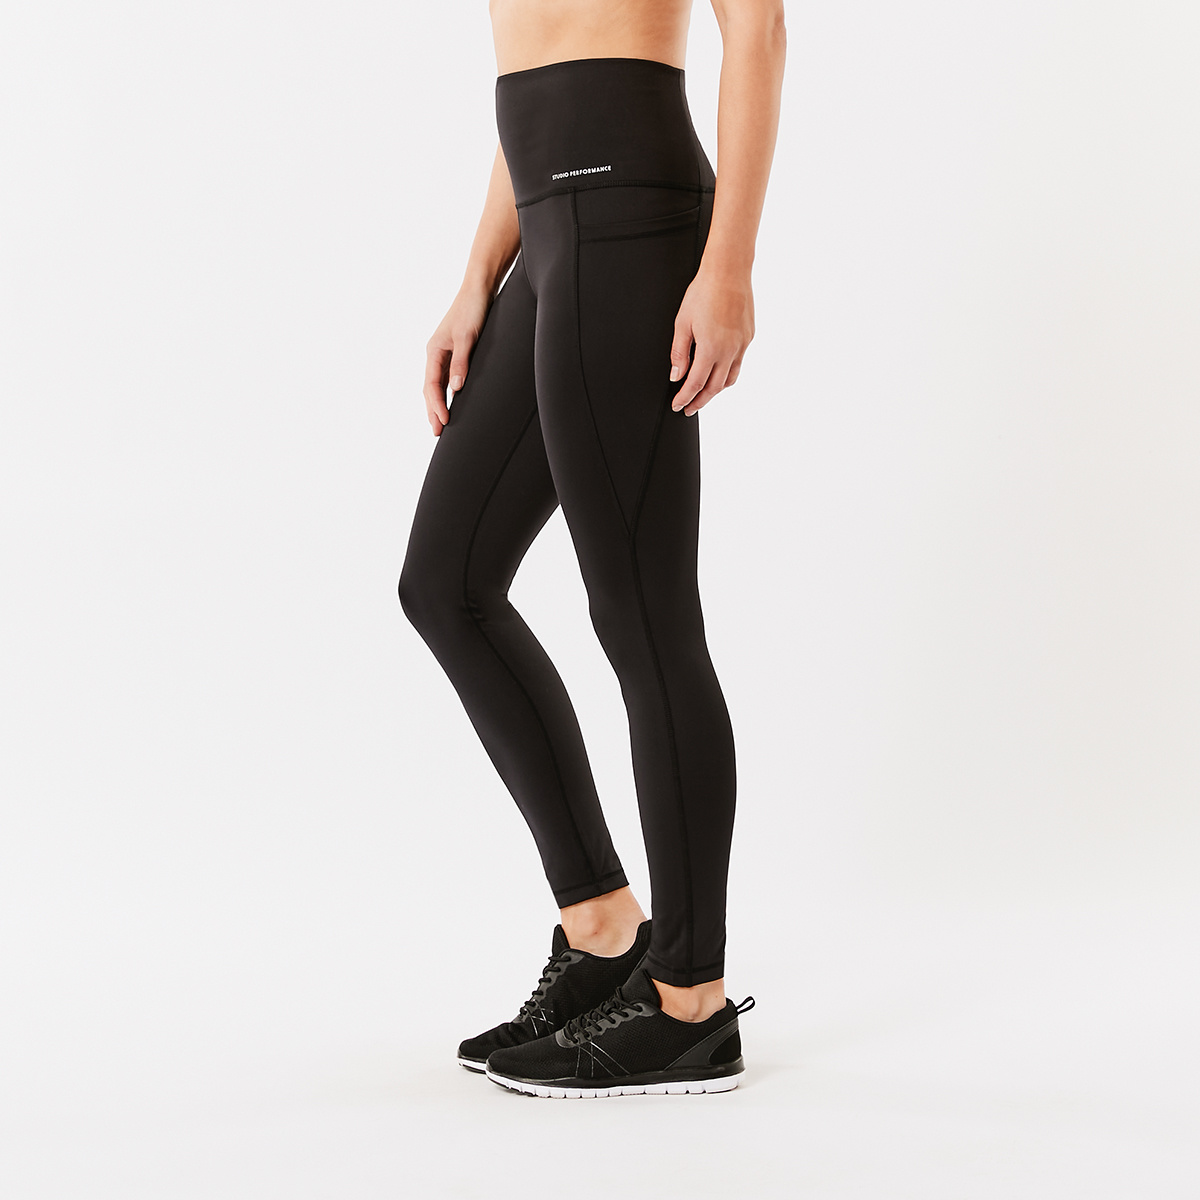 Kmart Active & Co Leggings Size 10 3/4 Length Gym Pants Activewear